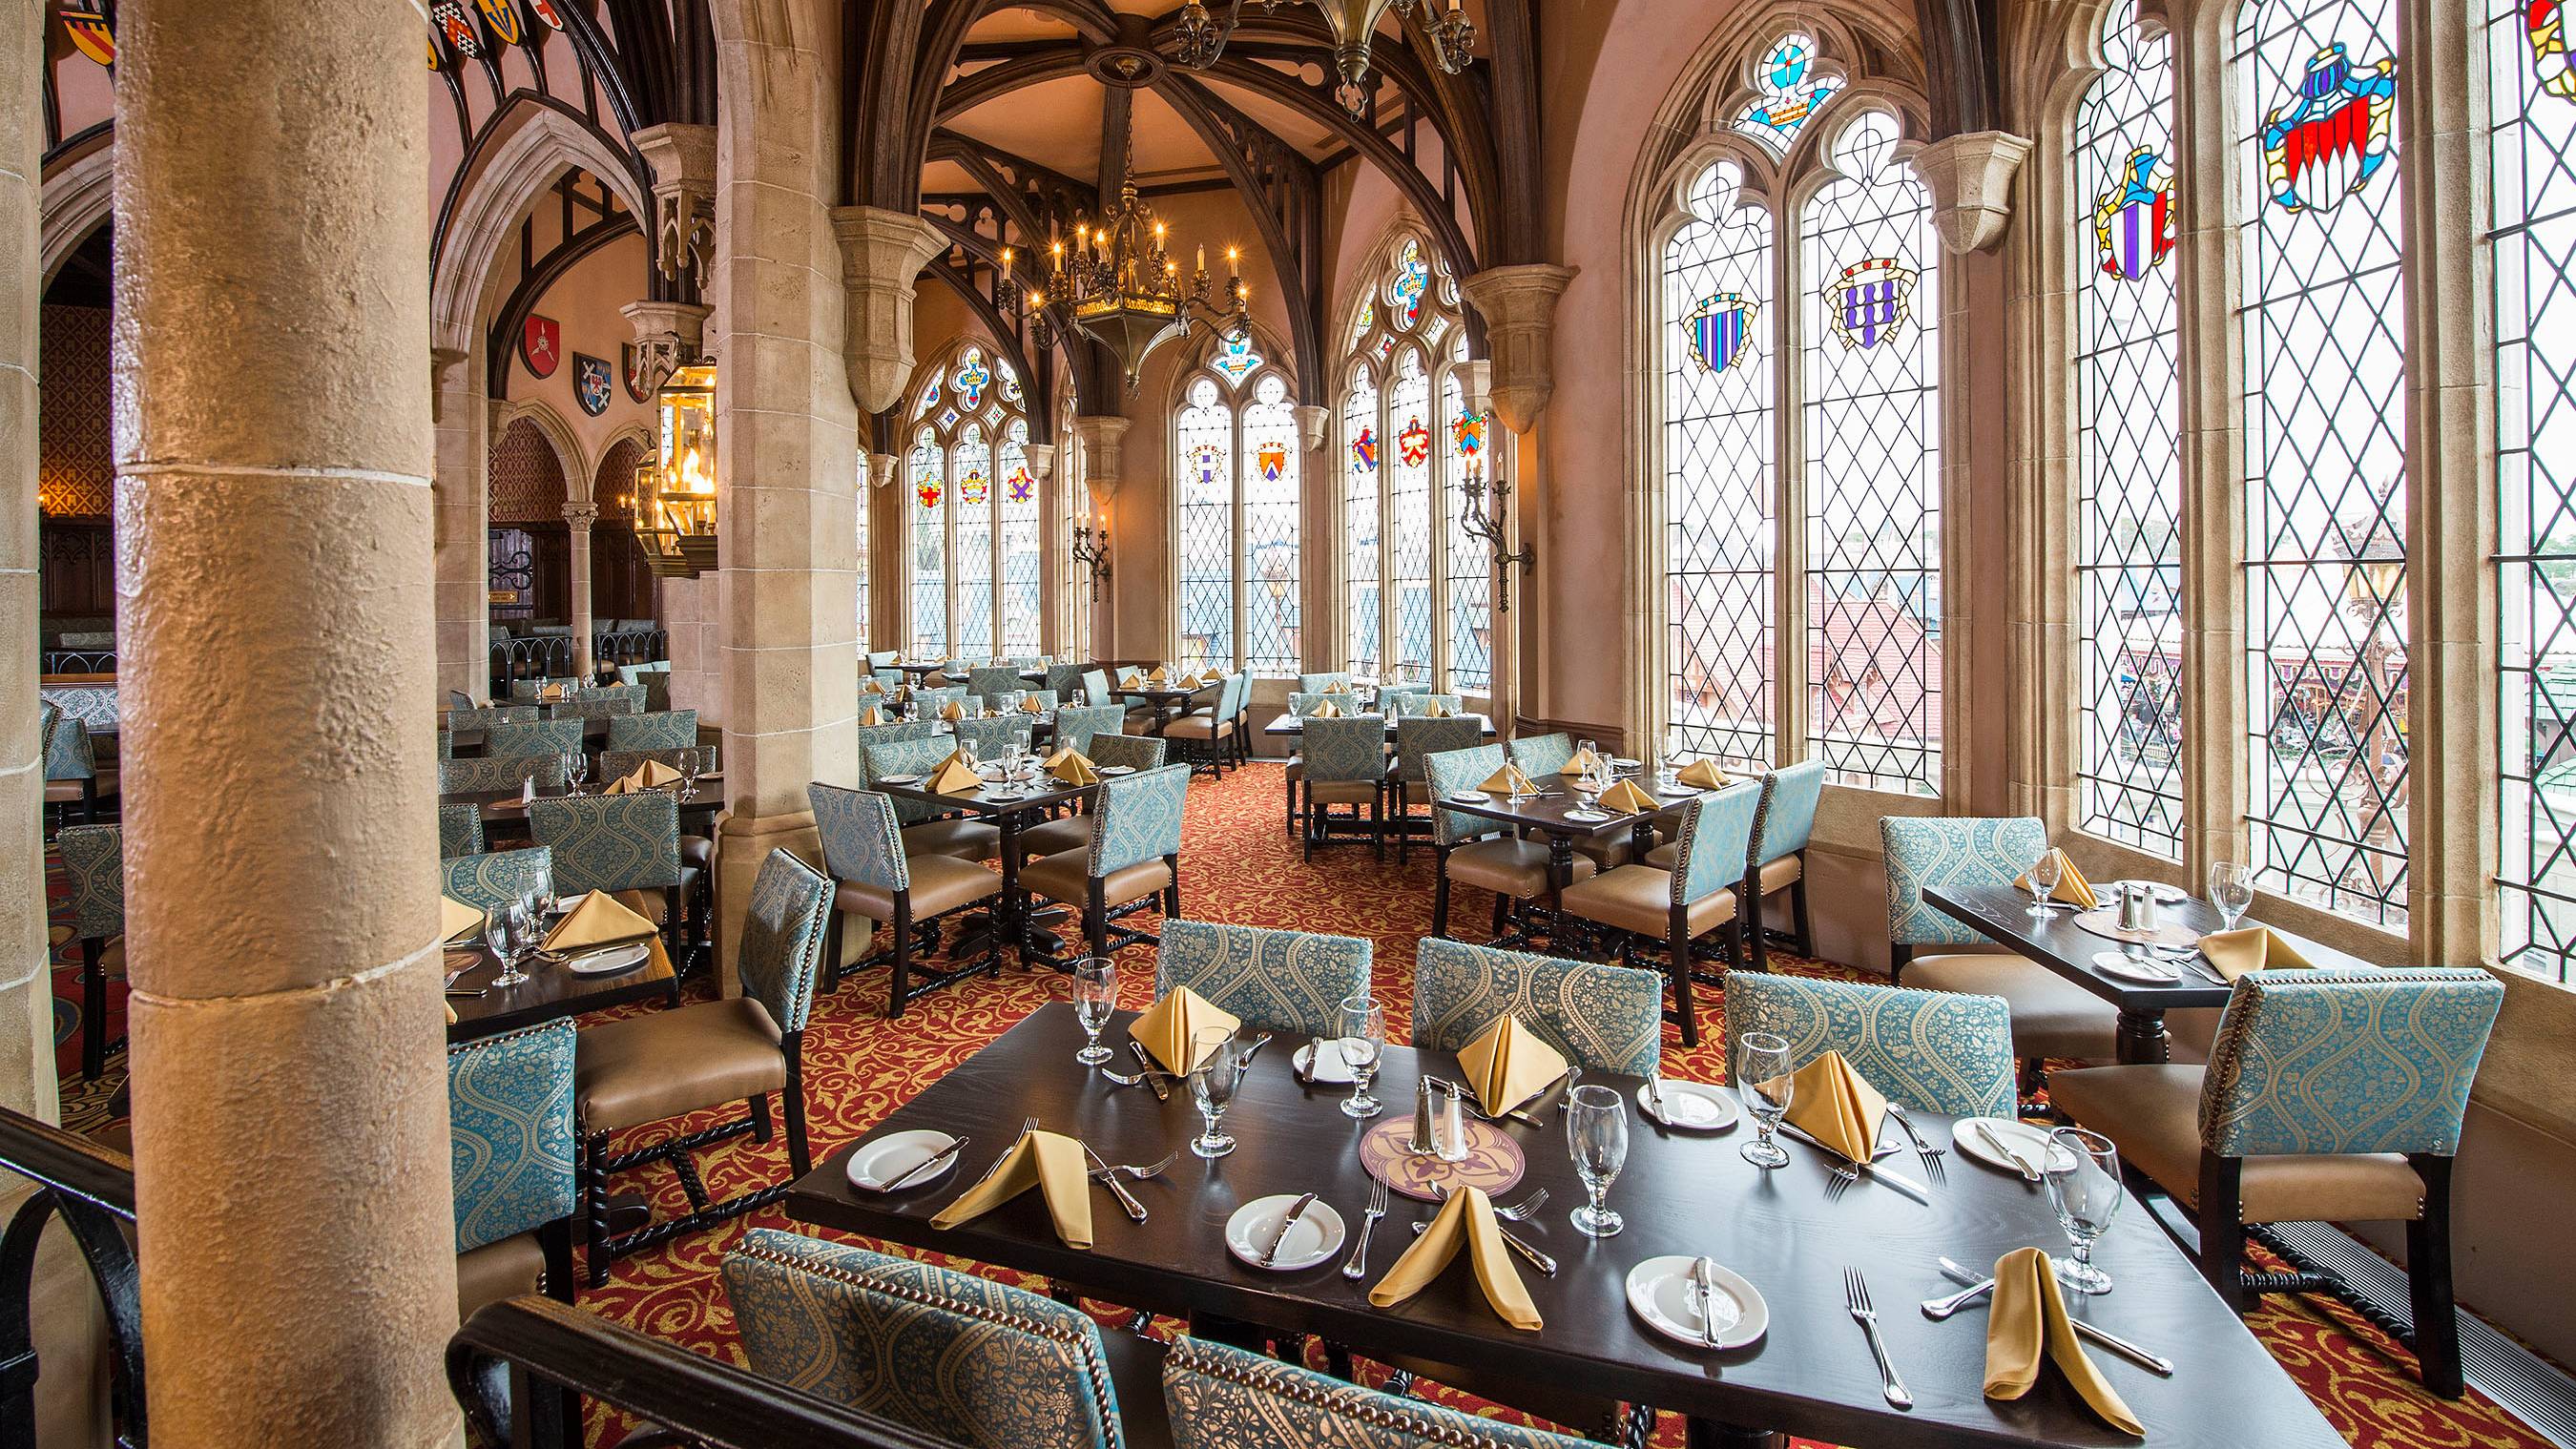 Cinderella's Royal Table closing for brief refurbishment in May